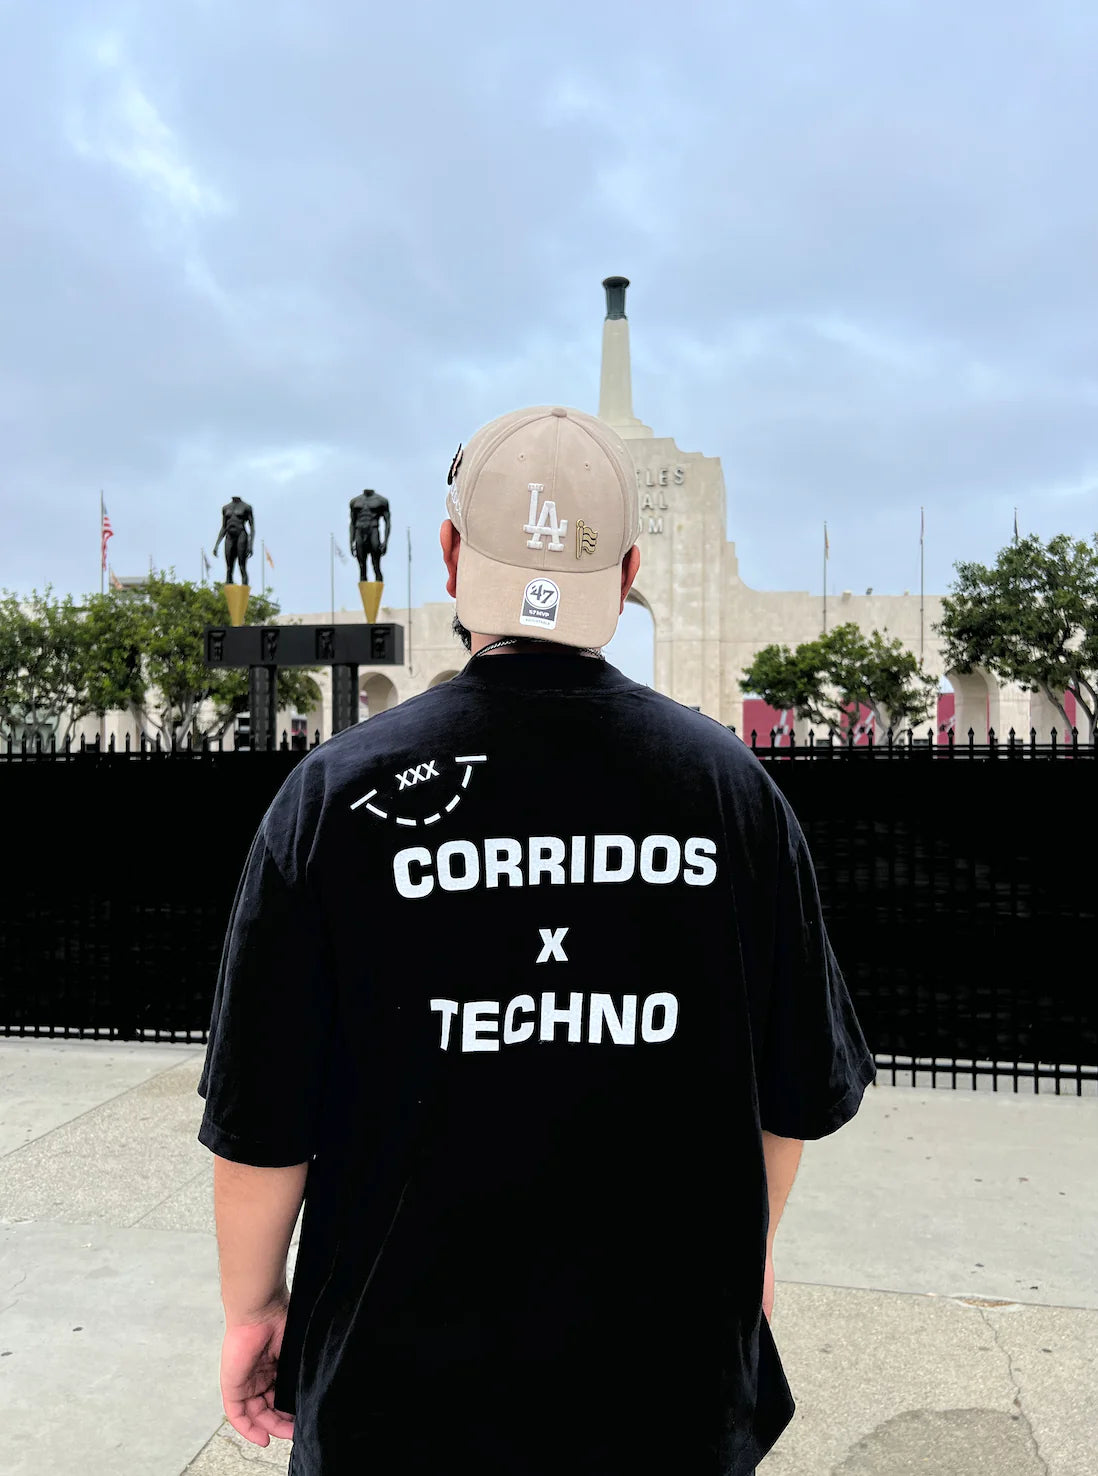 CORRIDOS X TECHNO T-SHIRT (BLACK)